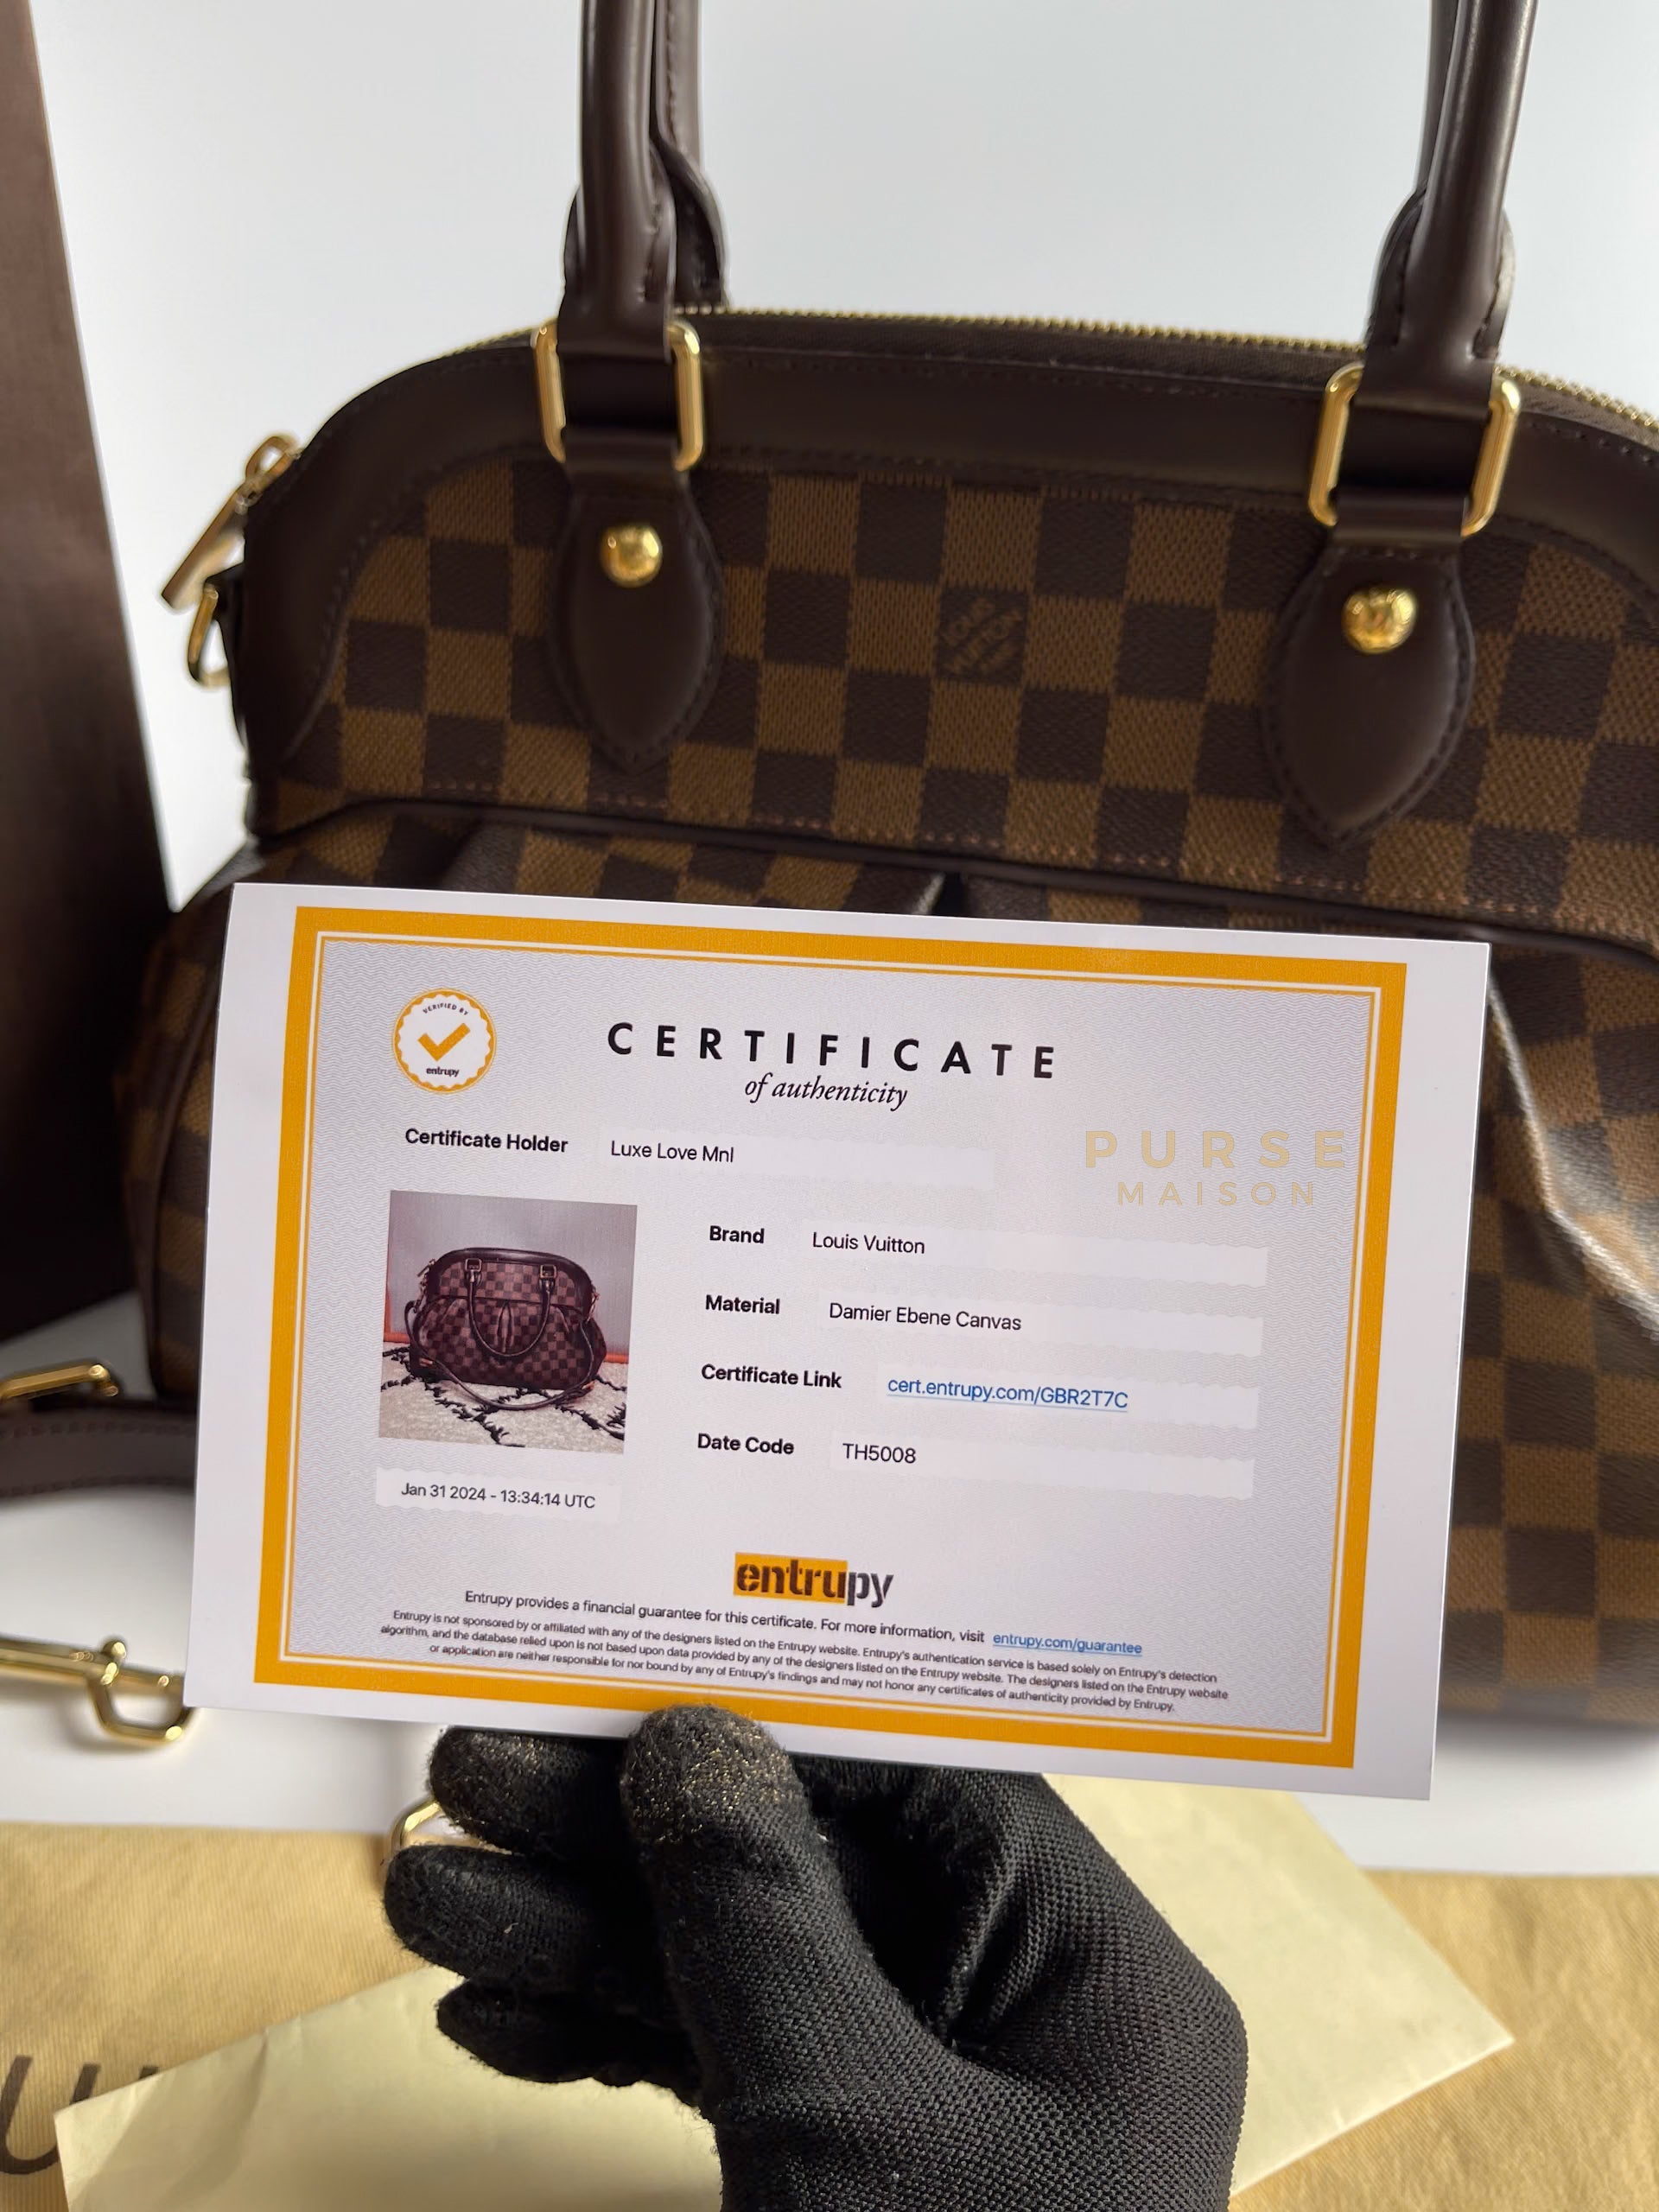 Trevi PM in Damier Ebene Canvas (Date code: TH5008) | Purse Maison Luxury Bags Shop